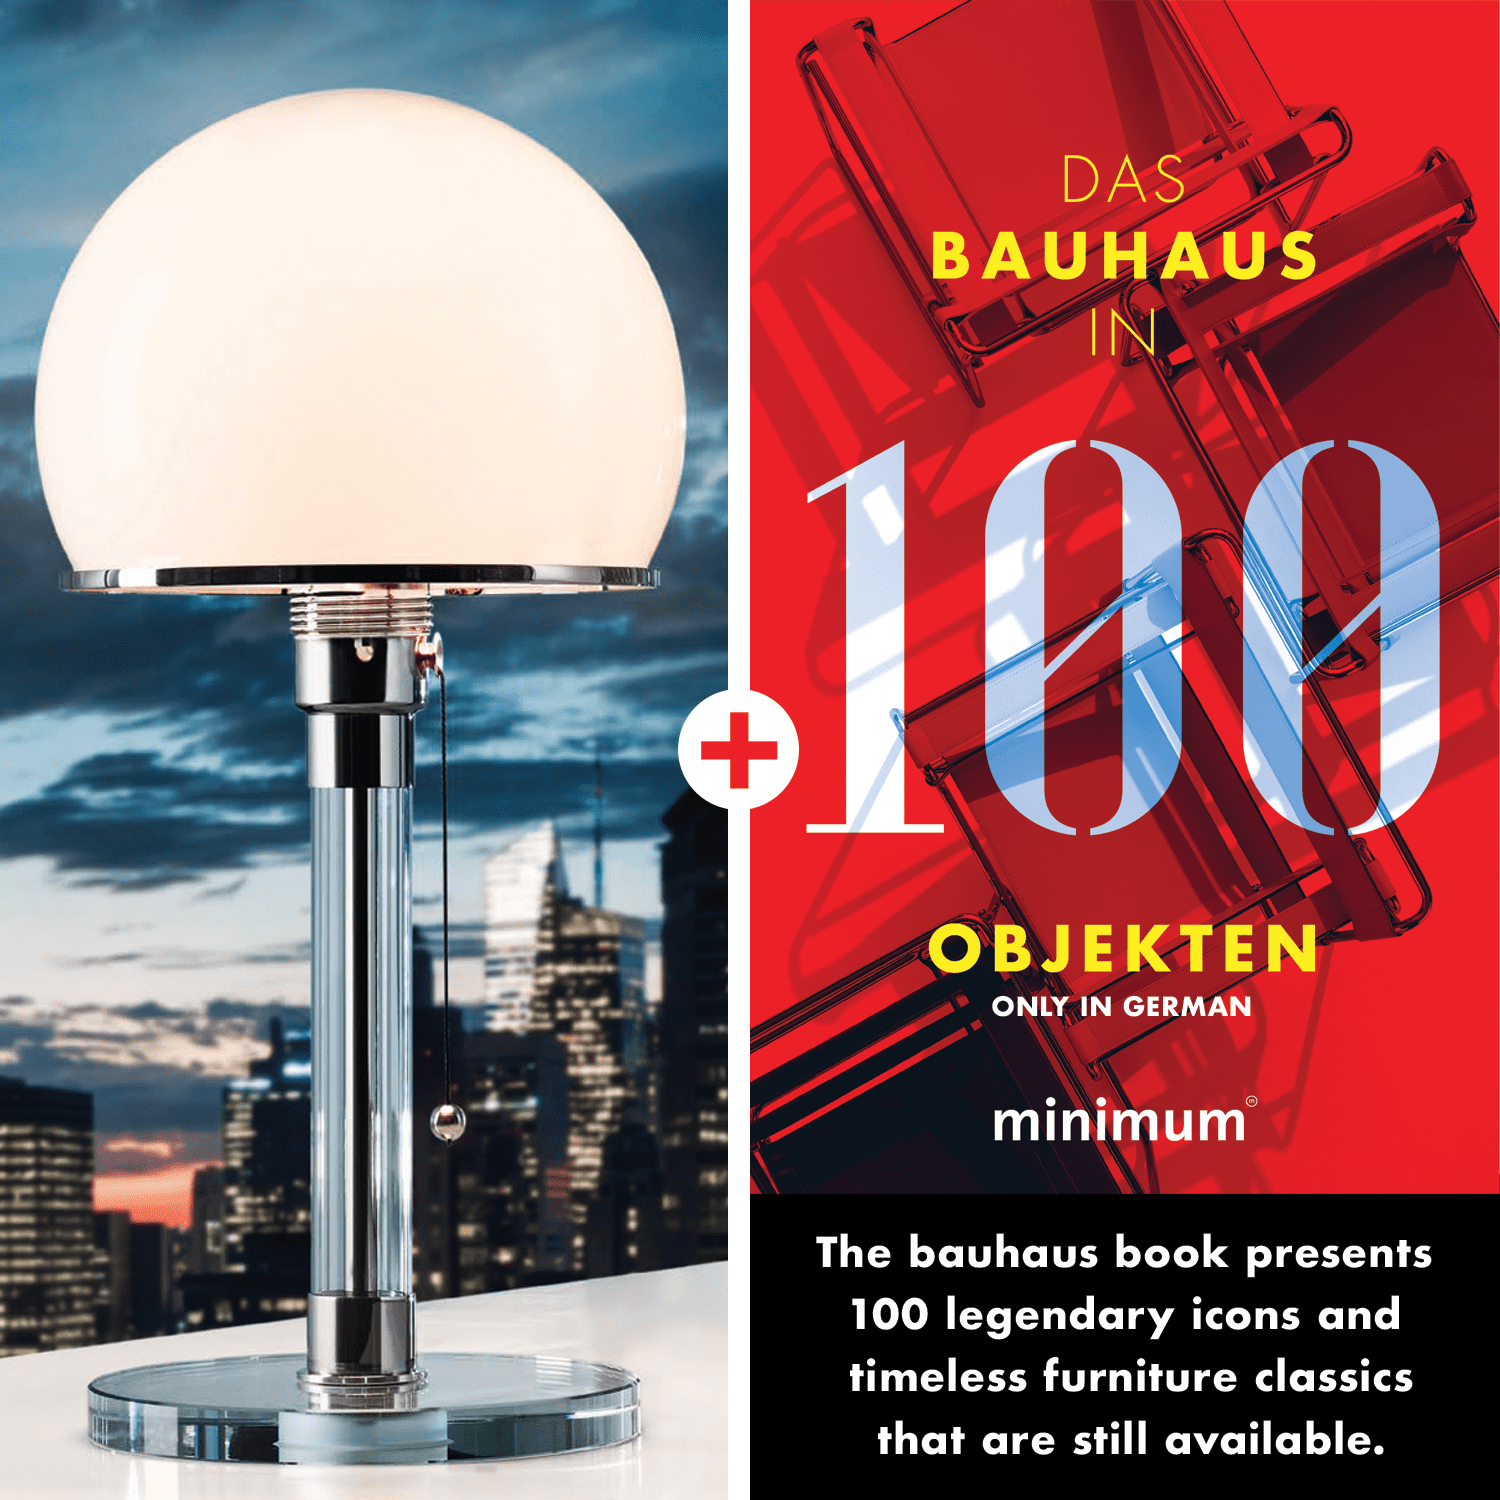 صورة Wagenfeld Lamp WG 24 + Bauhaus in 100 Objects
